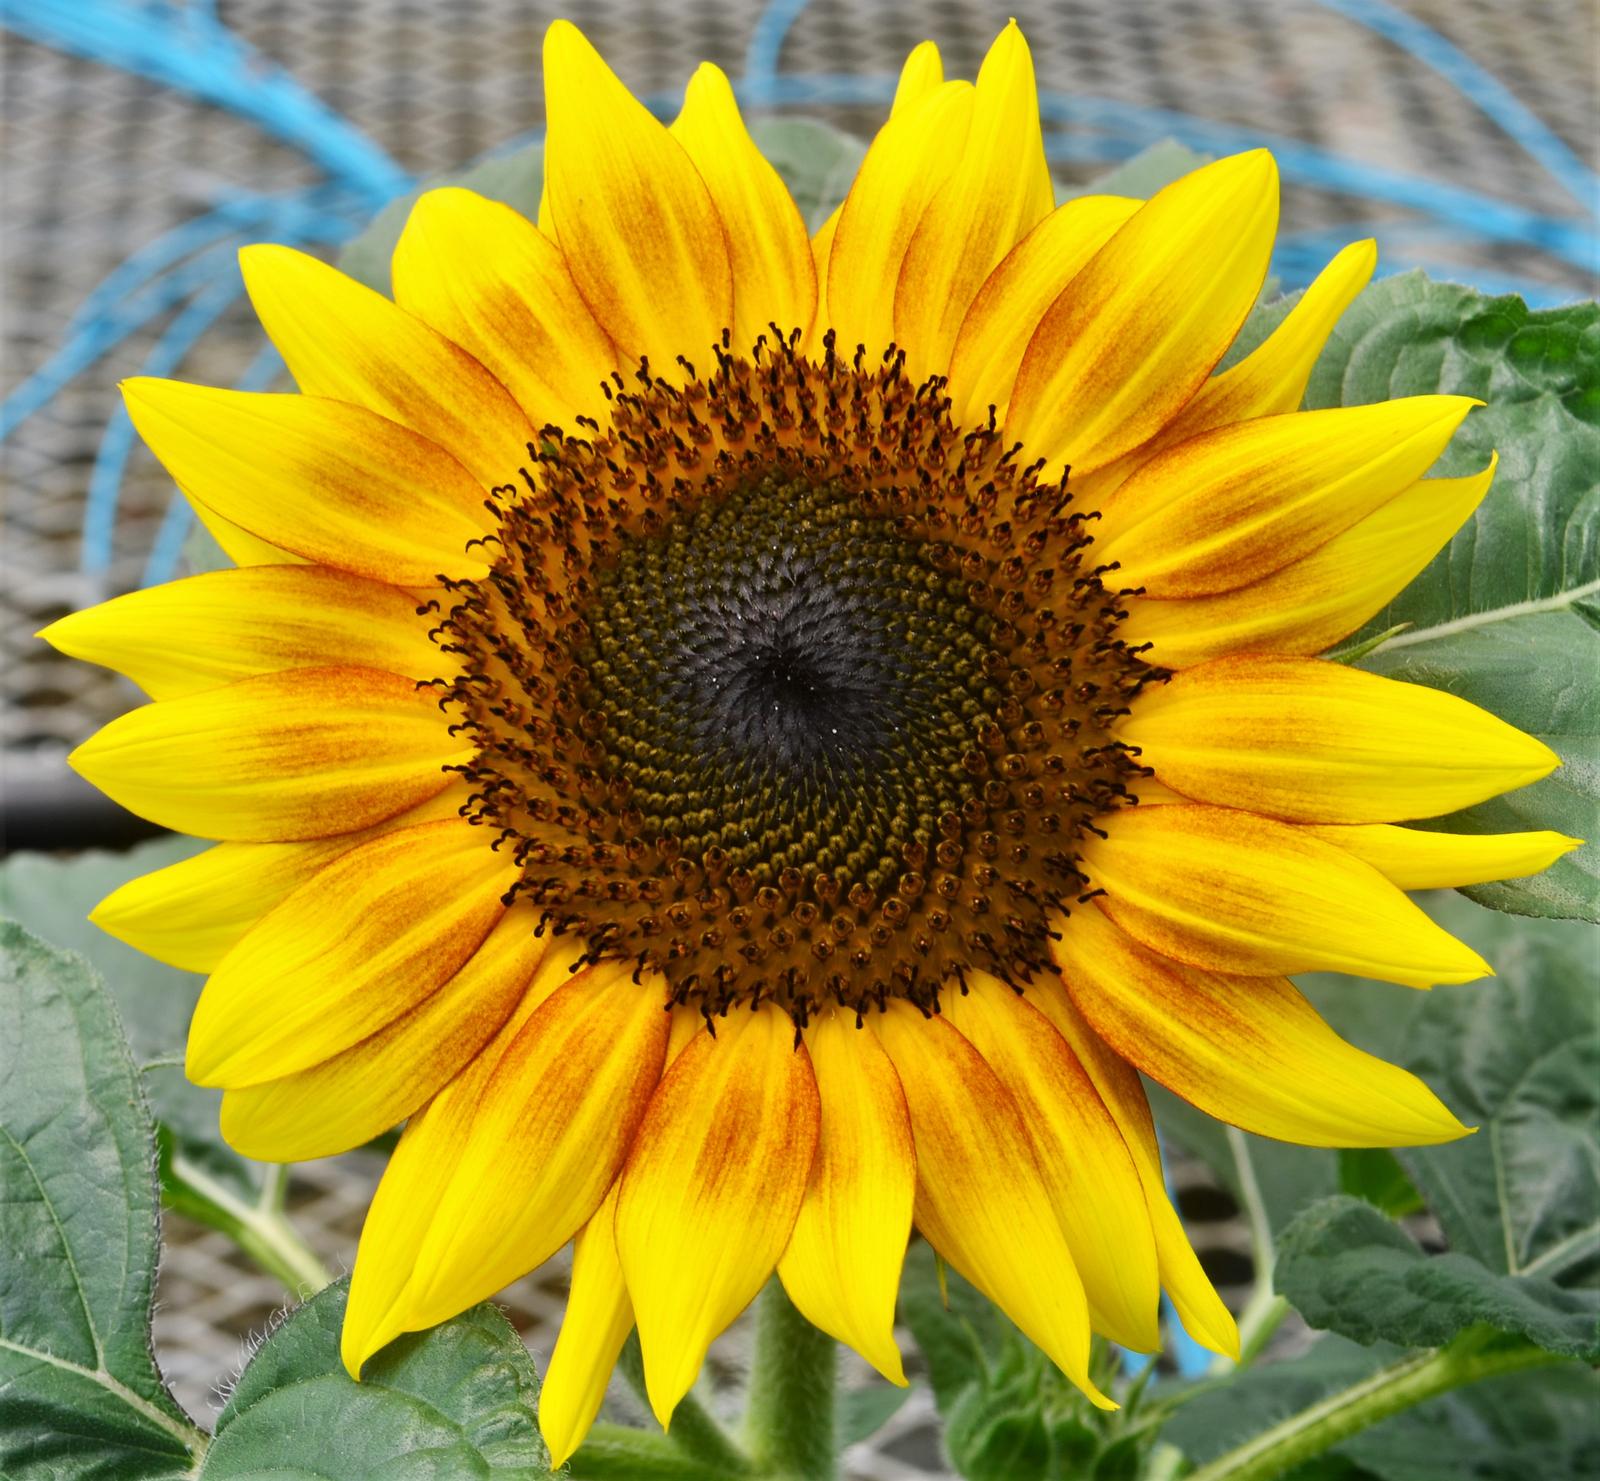 Helianthus annuus Solsation 'Flame' - Sunflower from Hillcrest Nursery